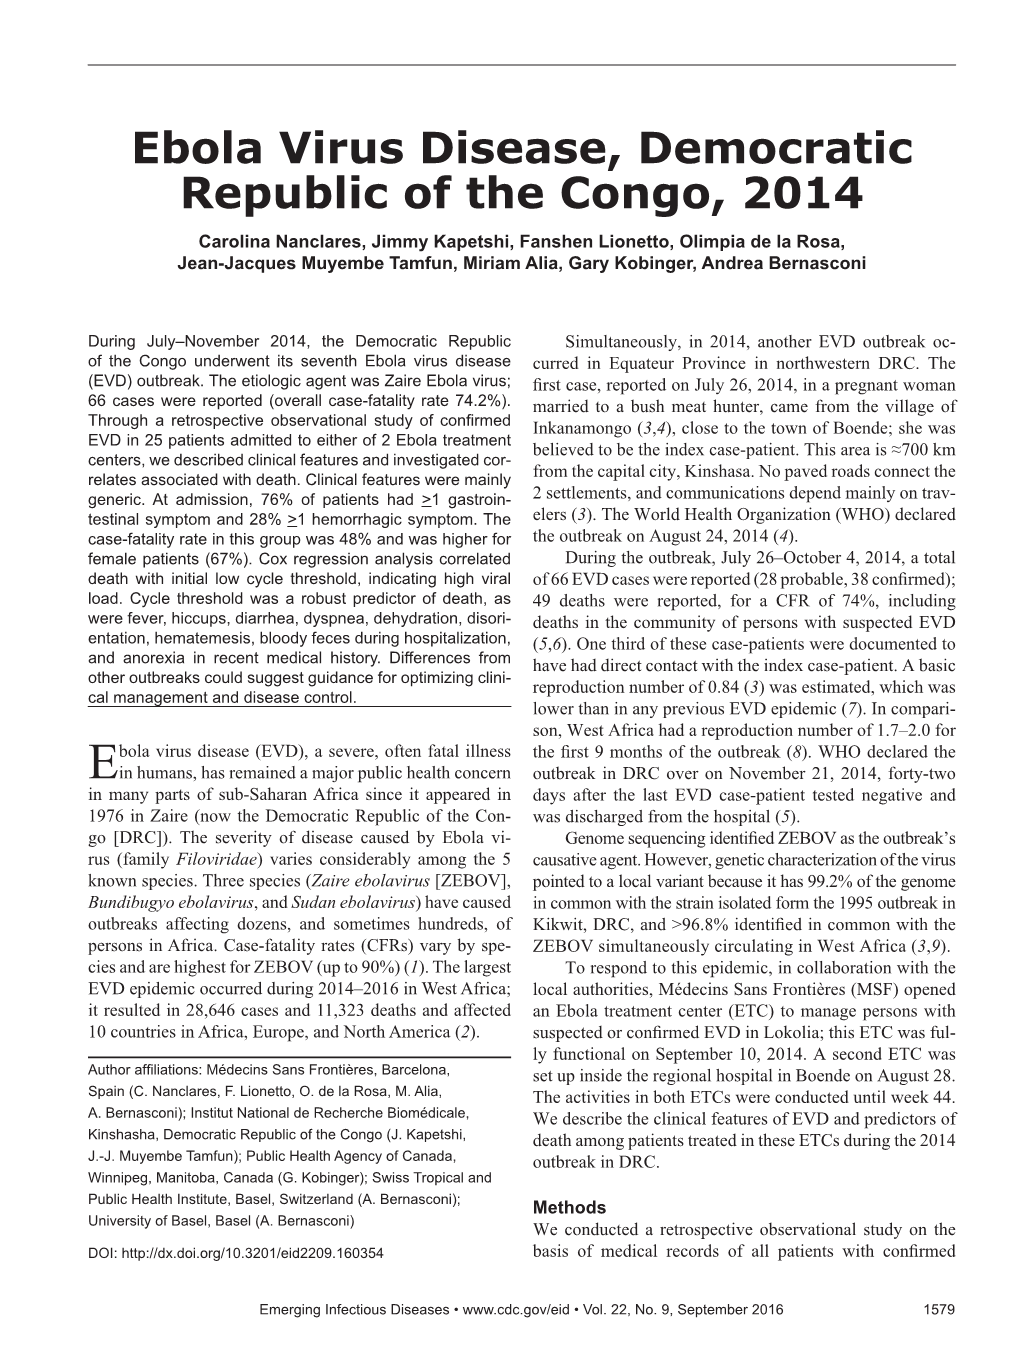 Ebola Virus Disease, Democratic Republic of the Congo, 2014